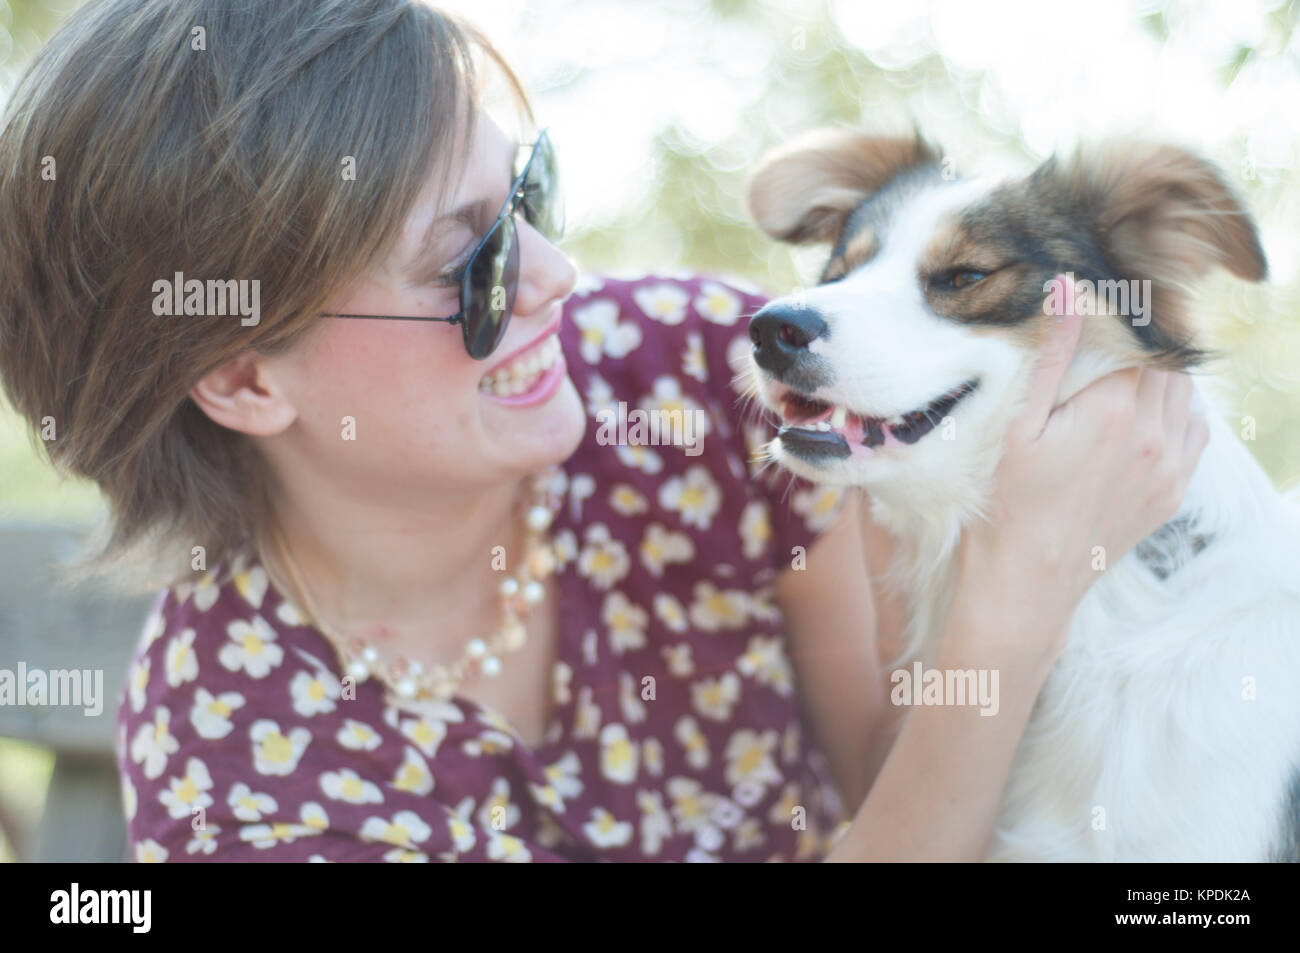 girl and pet dog Stock Photo